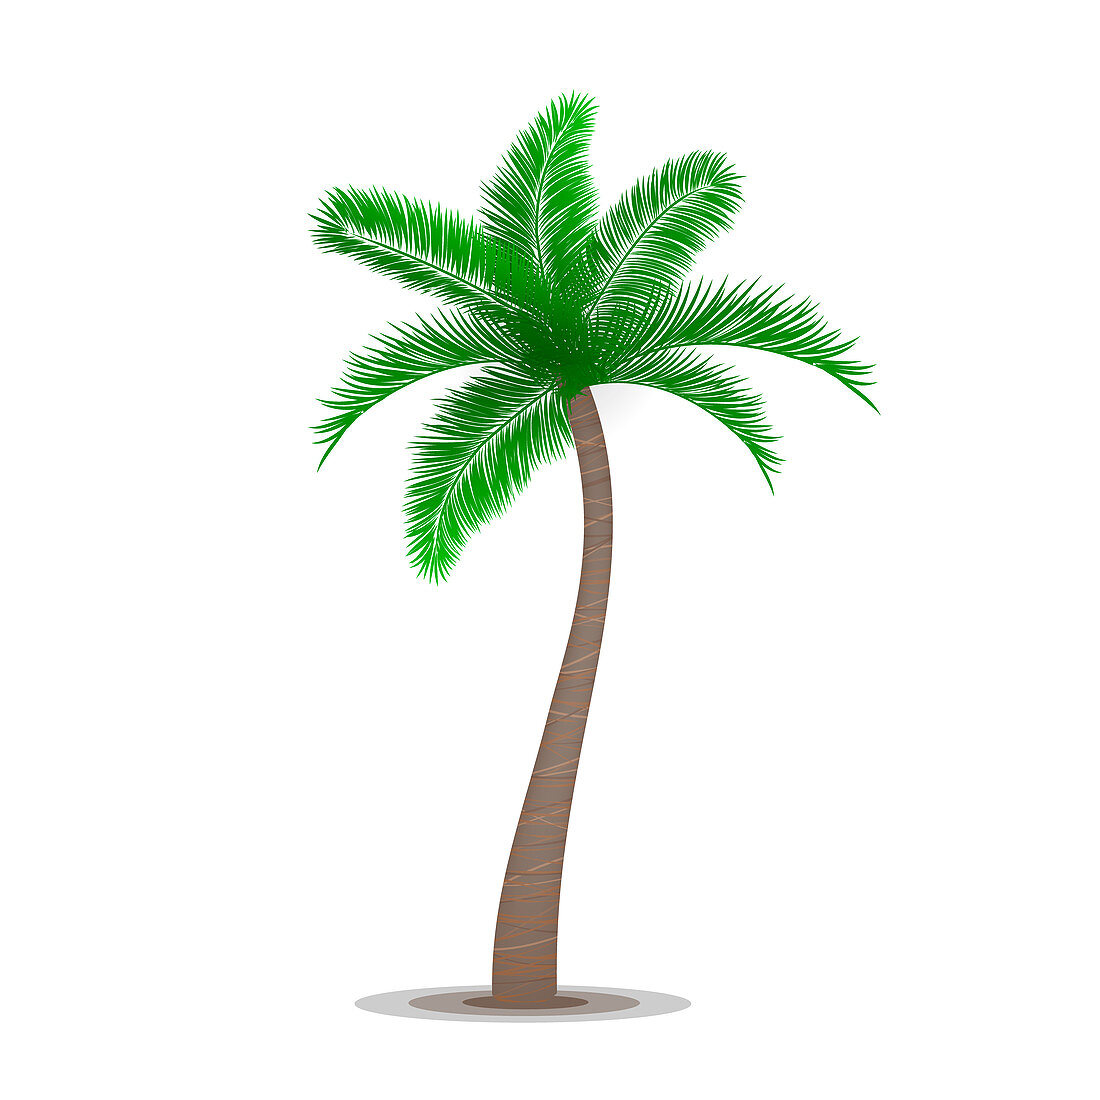 Tropical palm tree, illustration